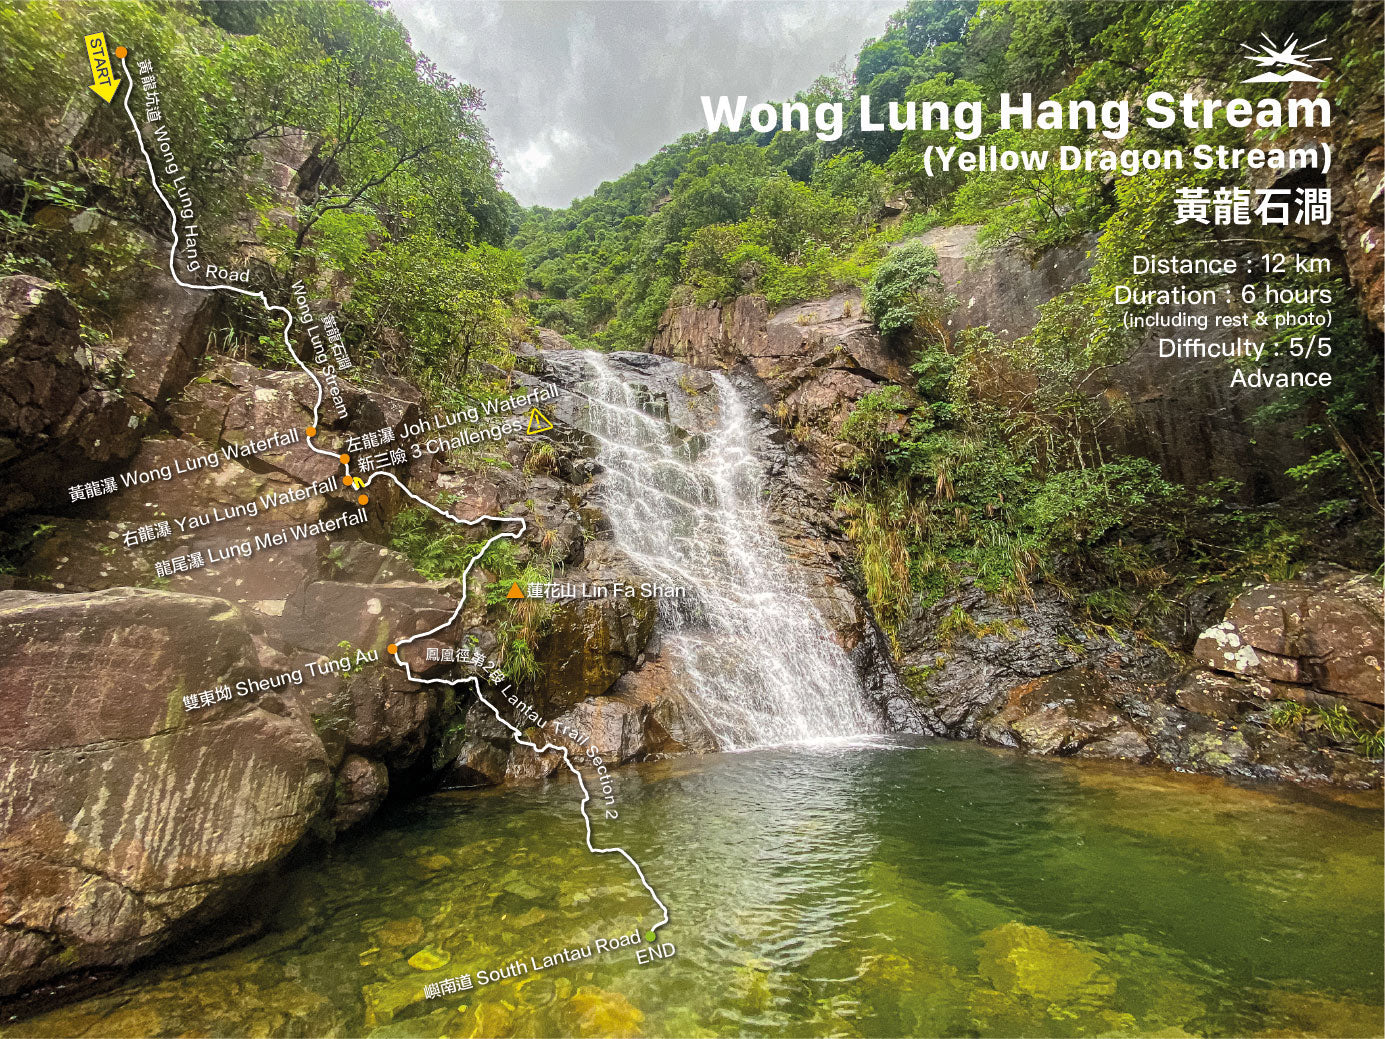 Wong Lung Hang Stream